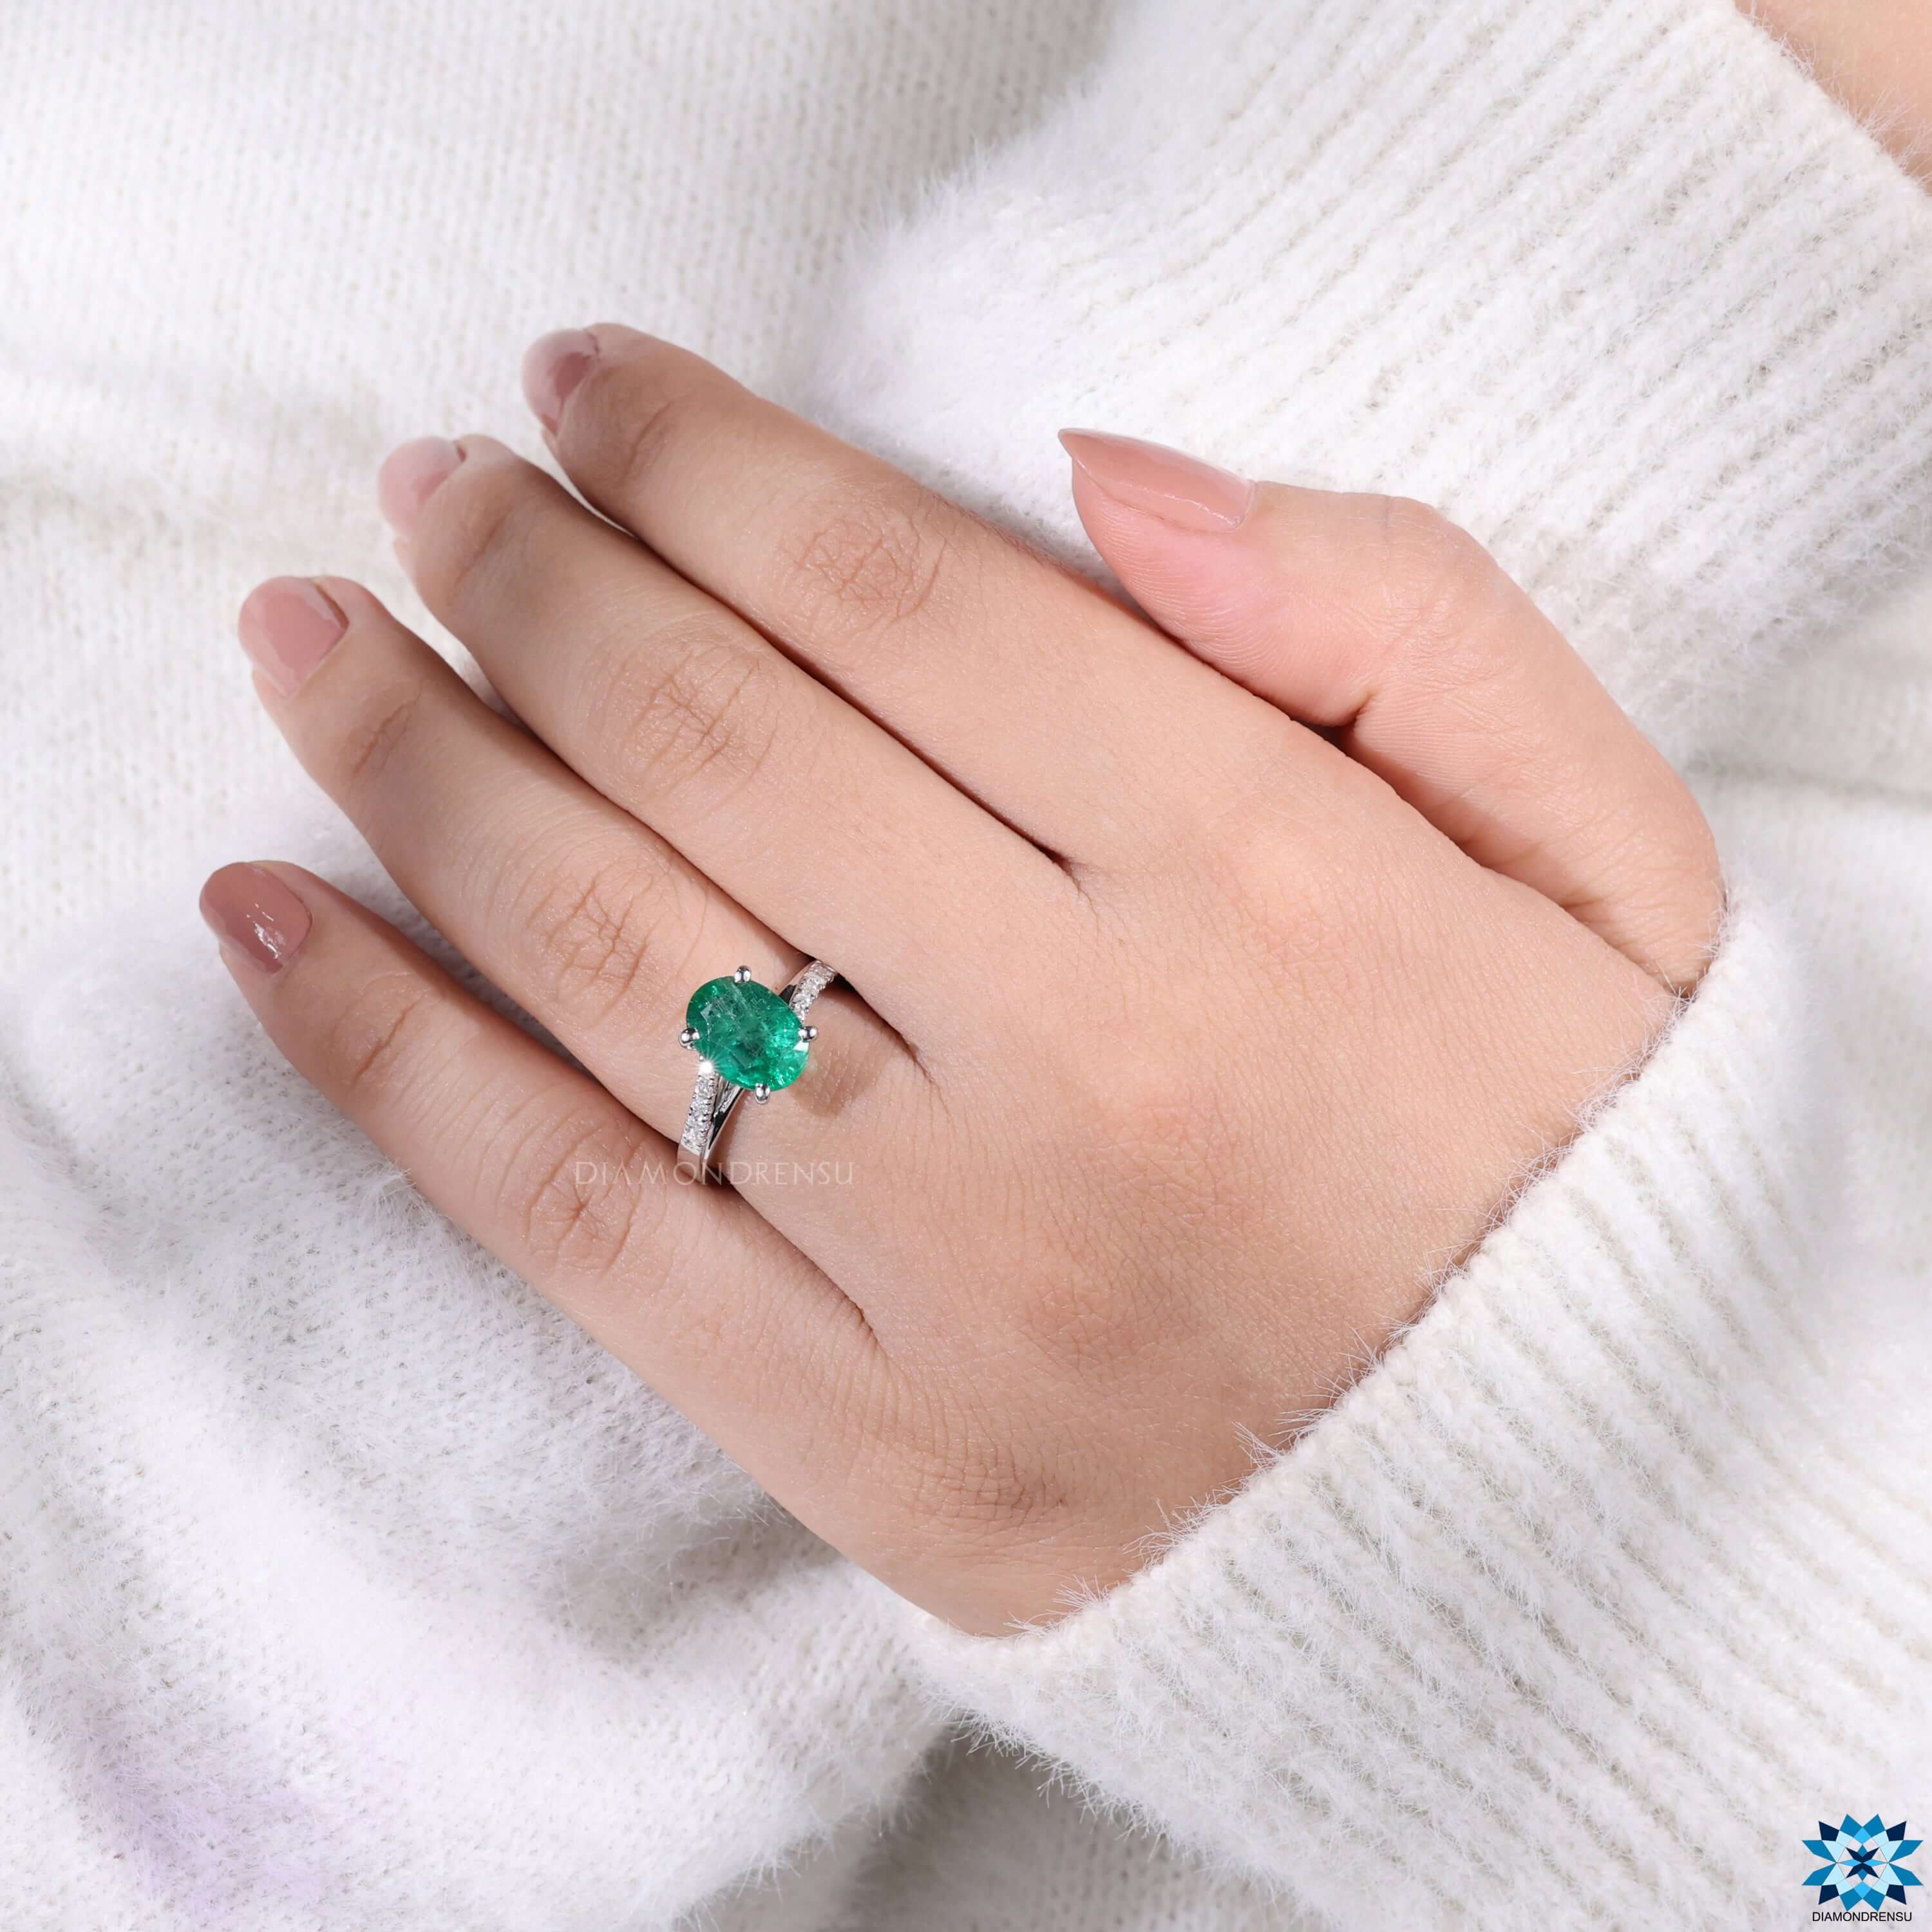 gemstone engagement ring - diamondrensu